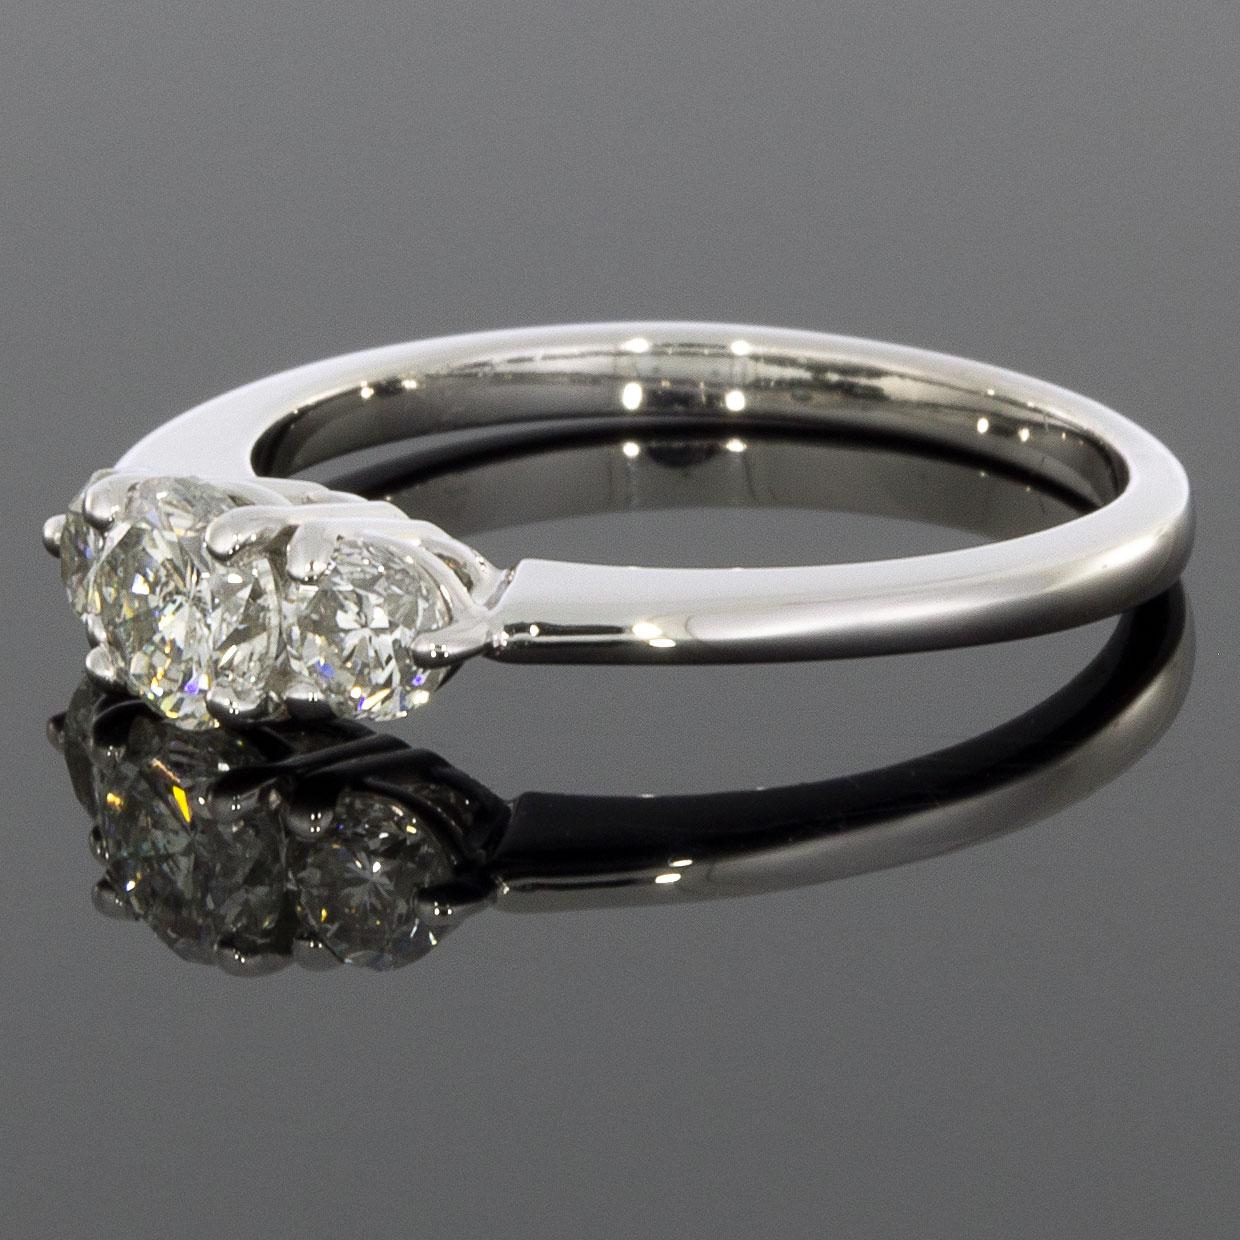 2 karat diamond ring